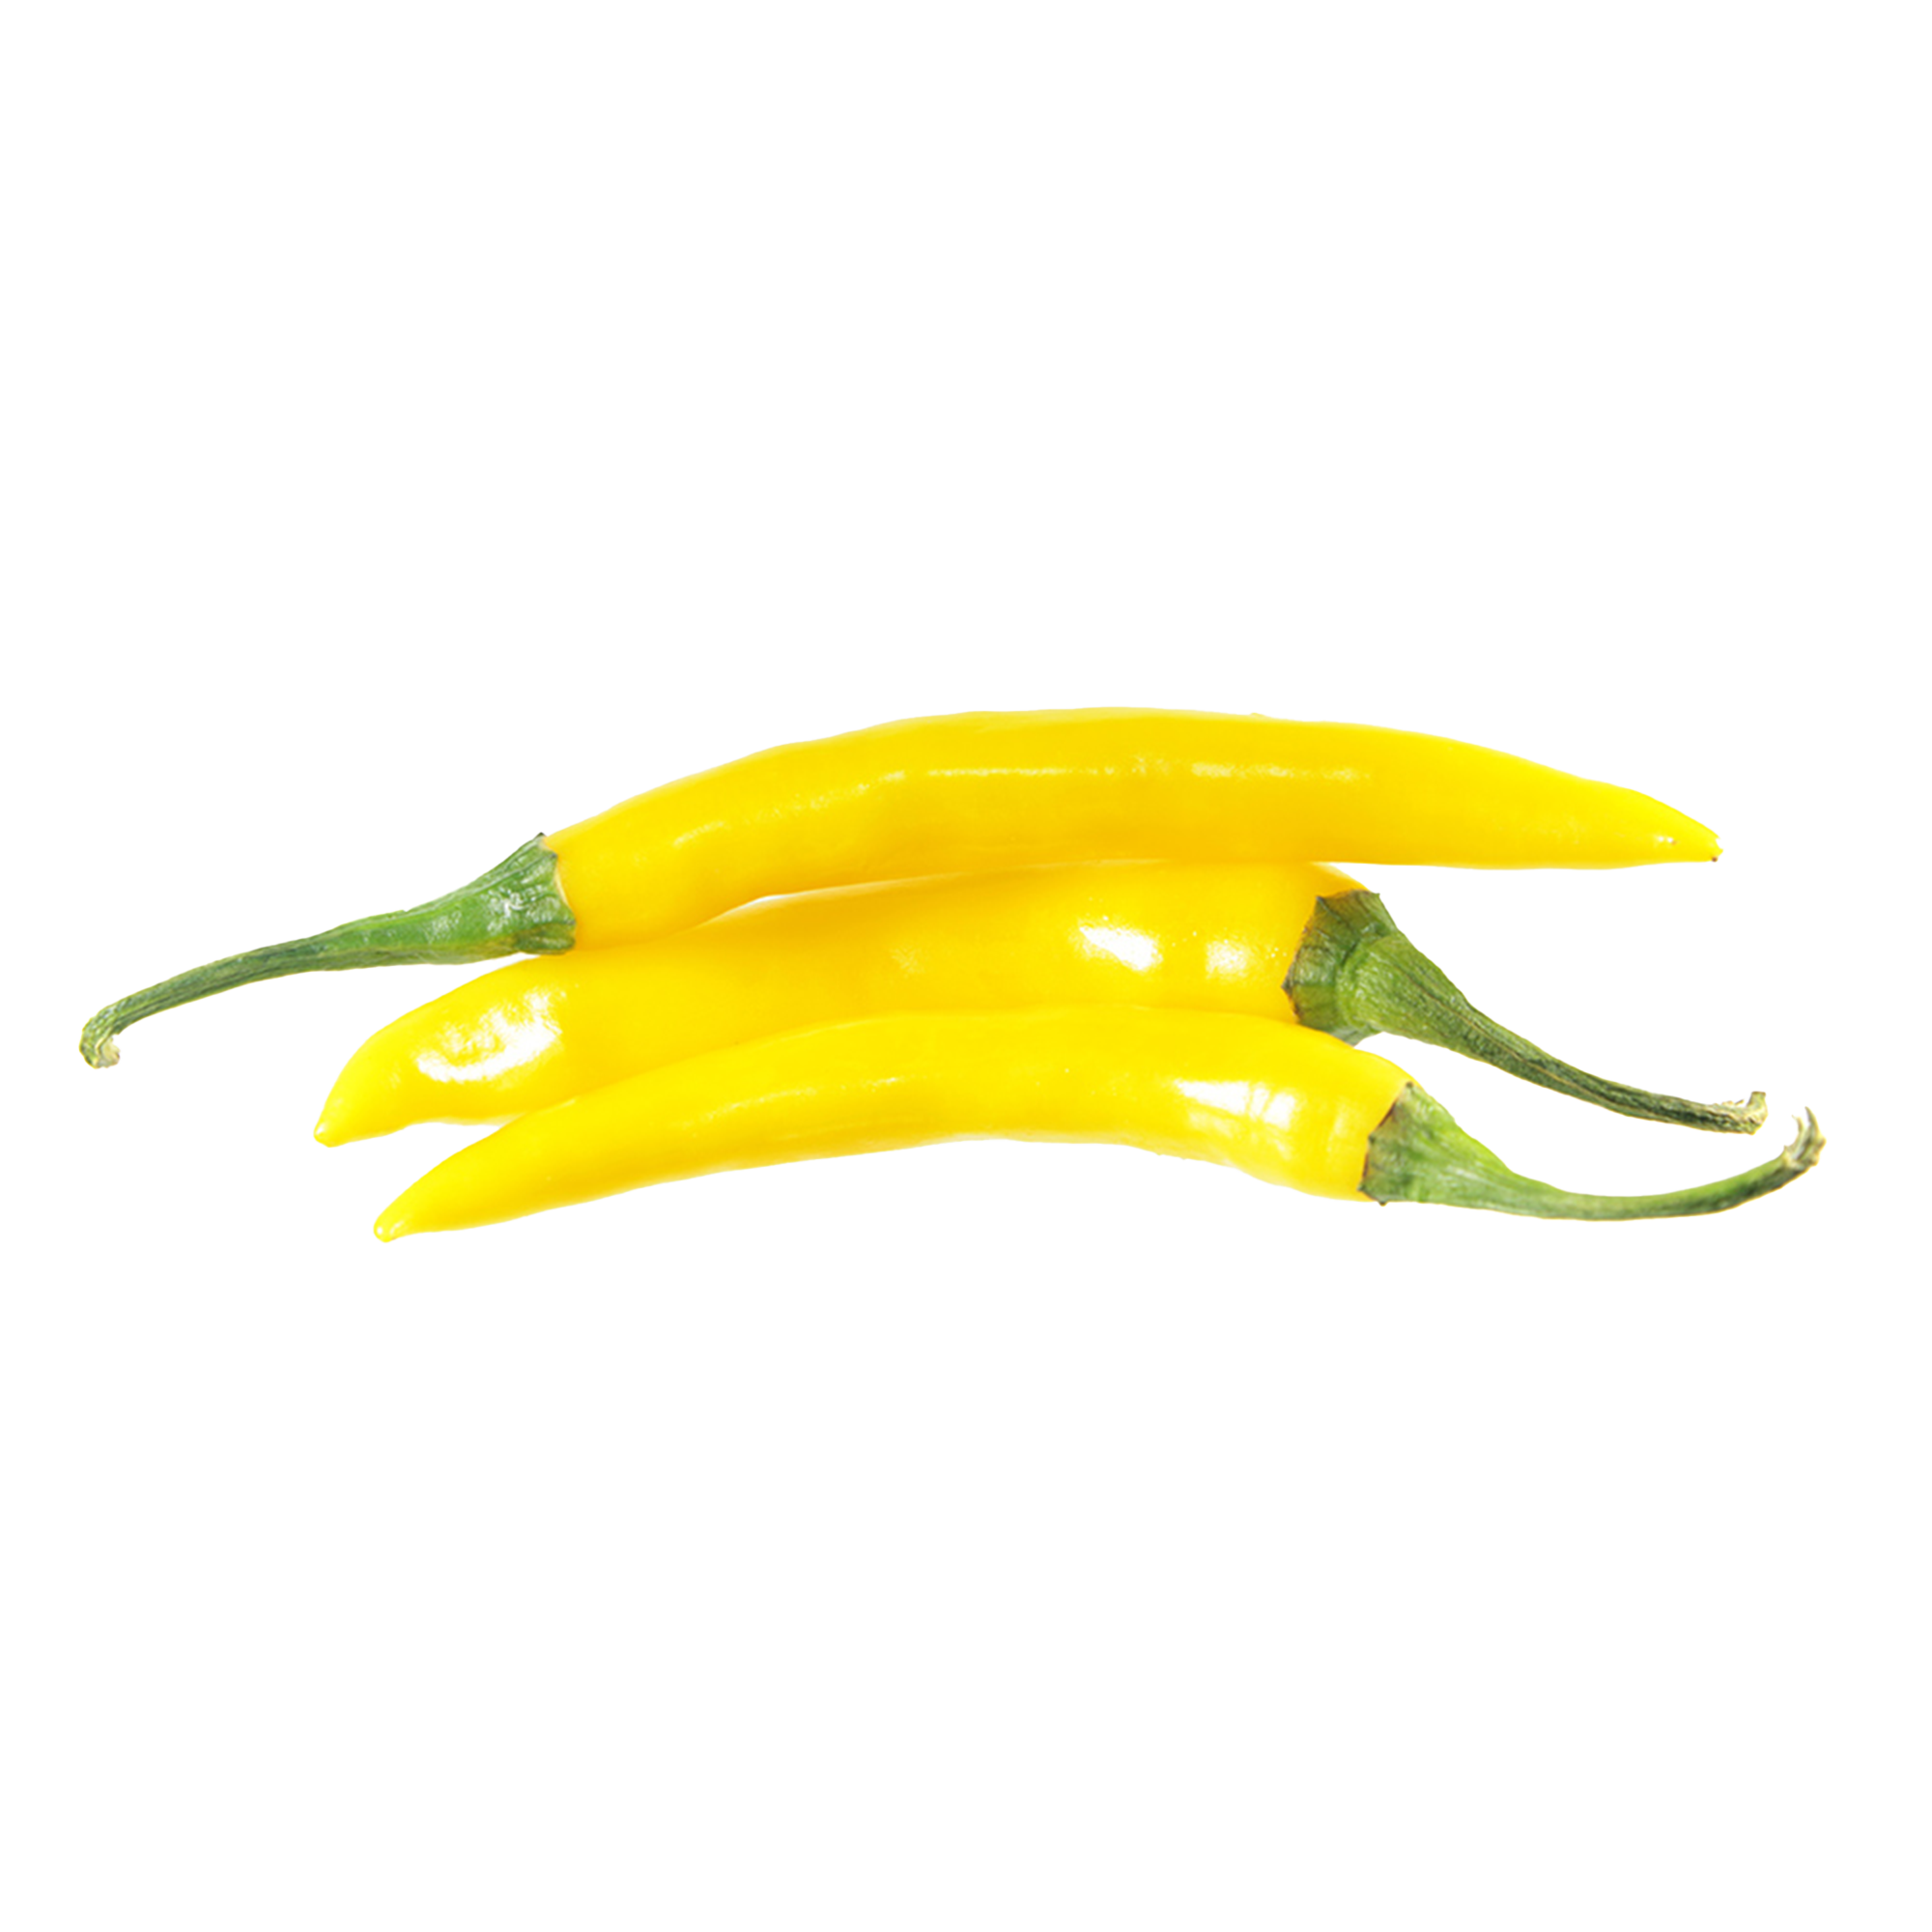 Chili plants "De Cayenne yellow"